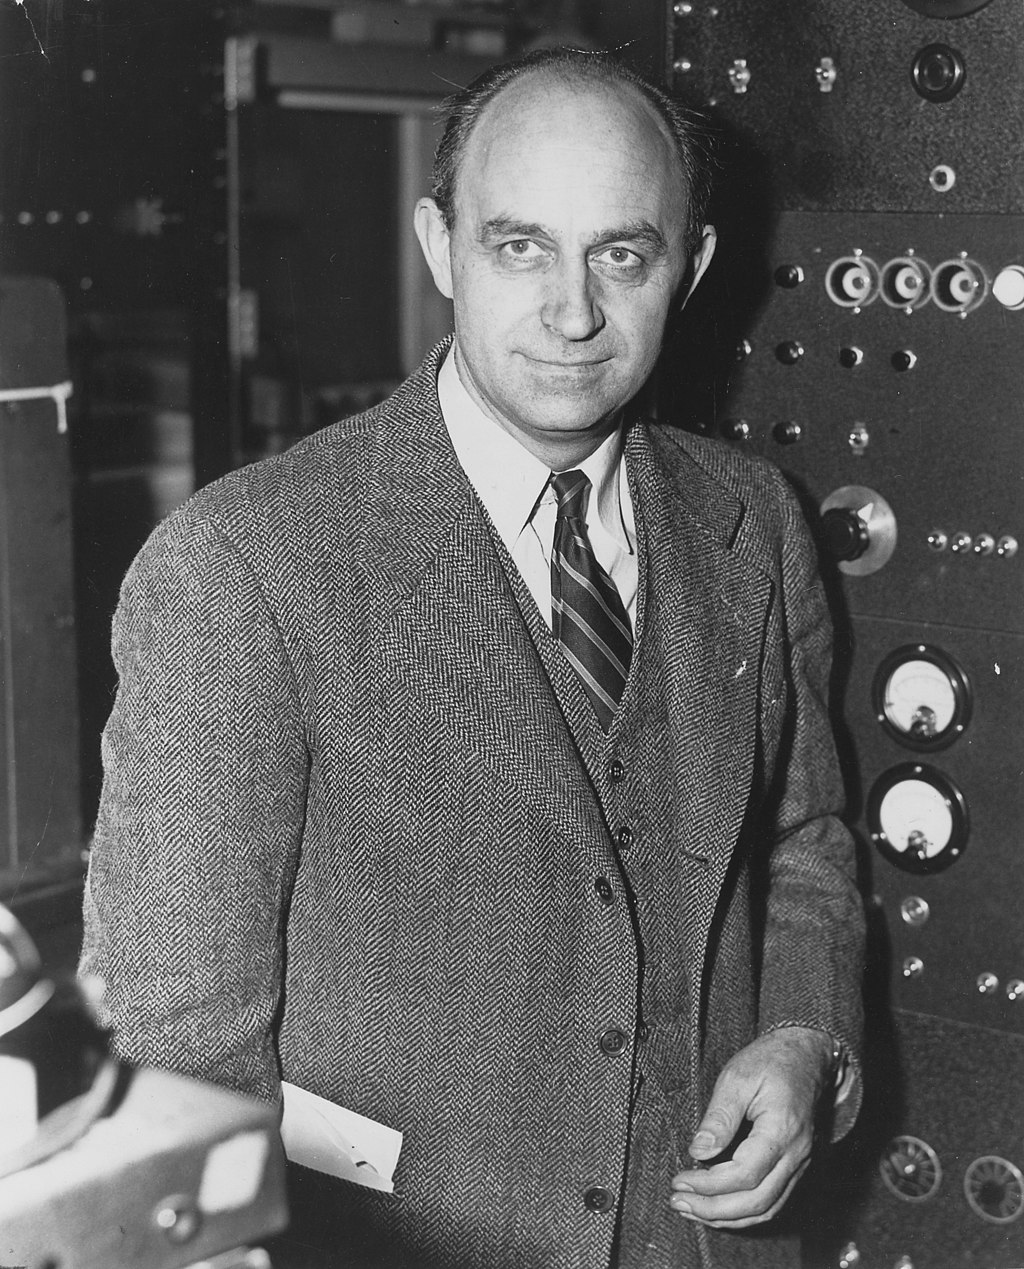 Enrico Fermi, Department of Energy. Office of Public Affairs, Public domain, via Wikimedia Commons